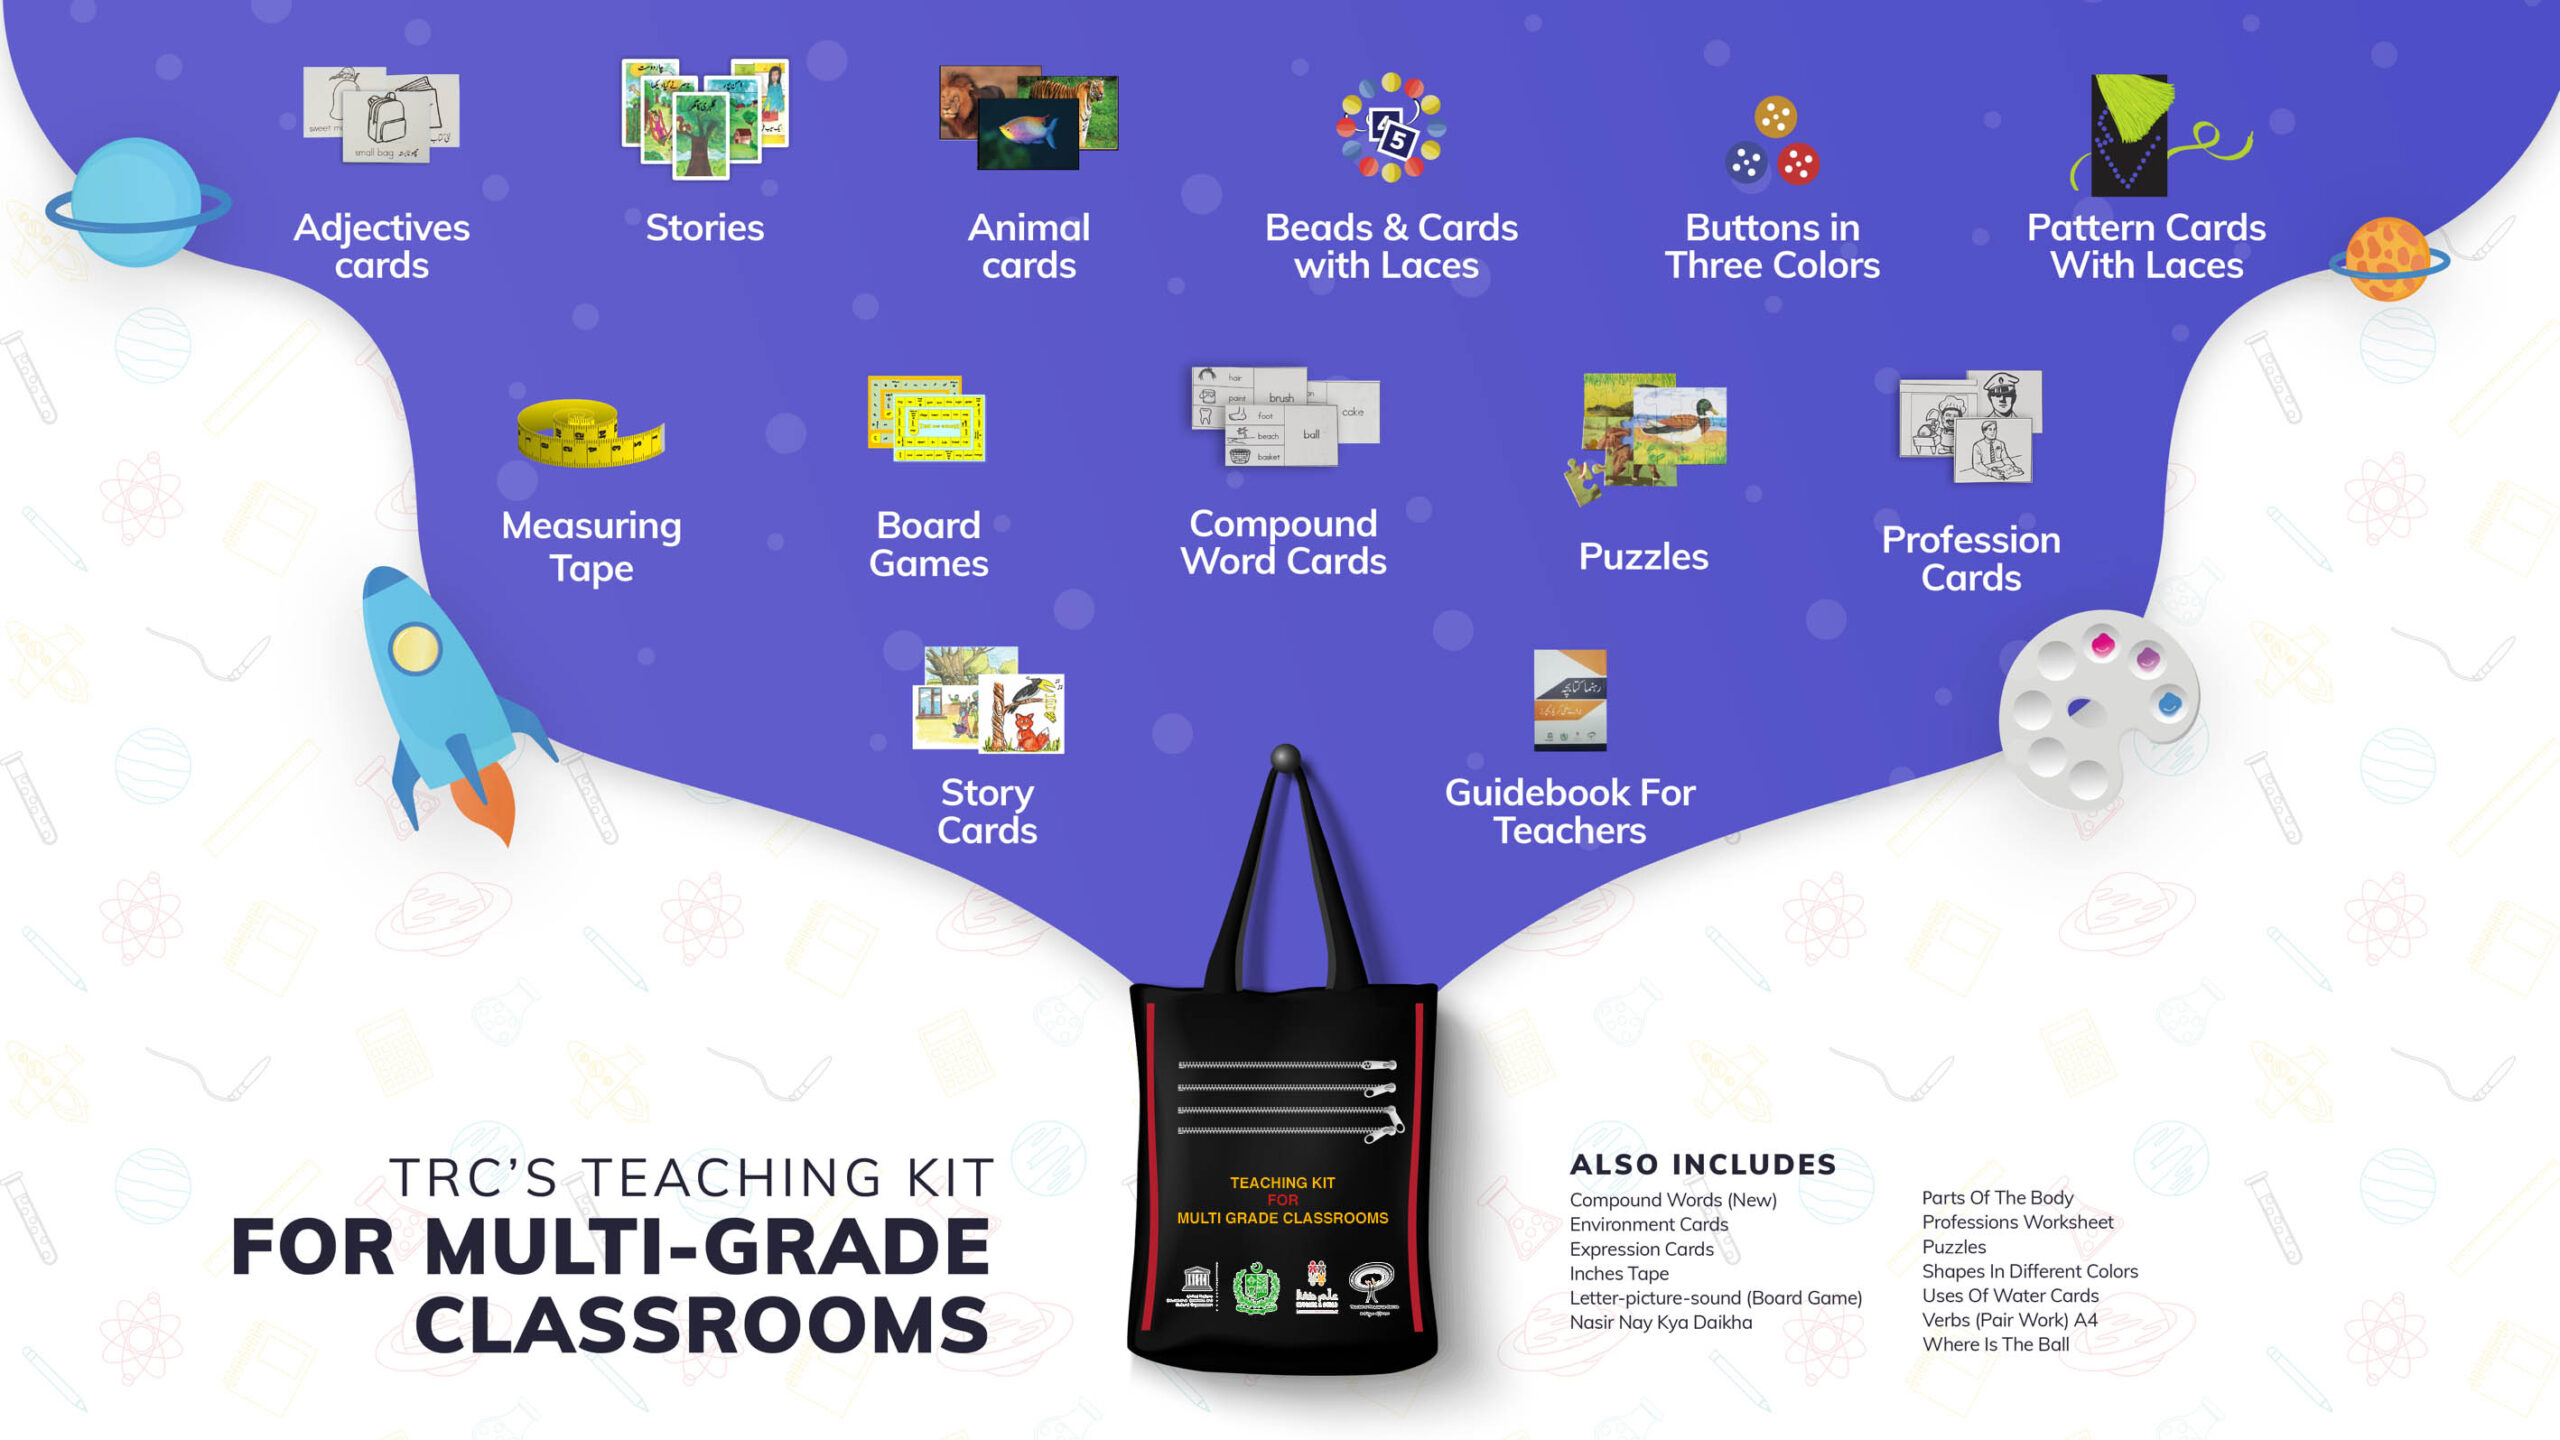 MG Classroom Teaching kit